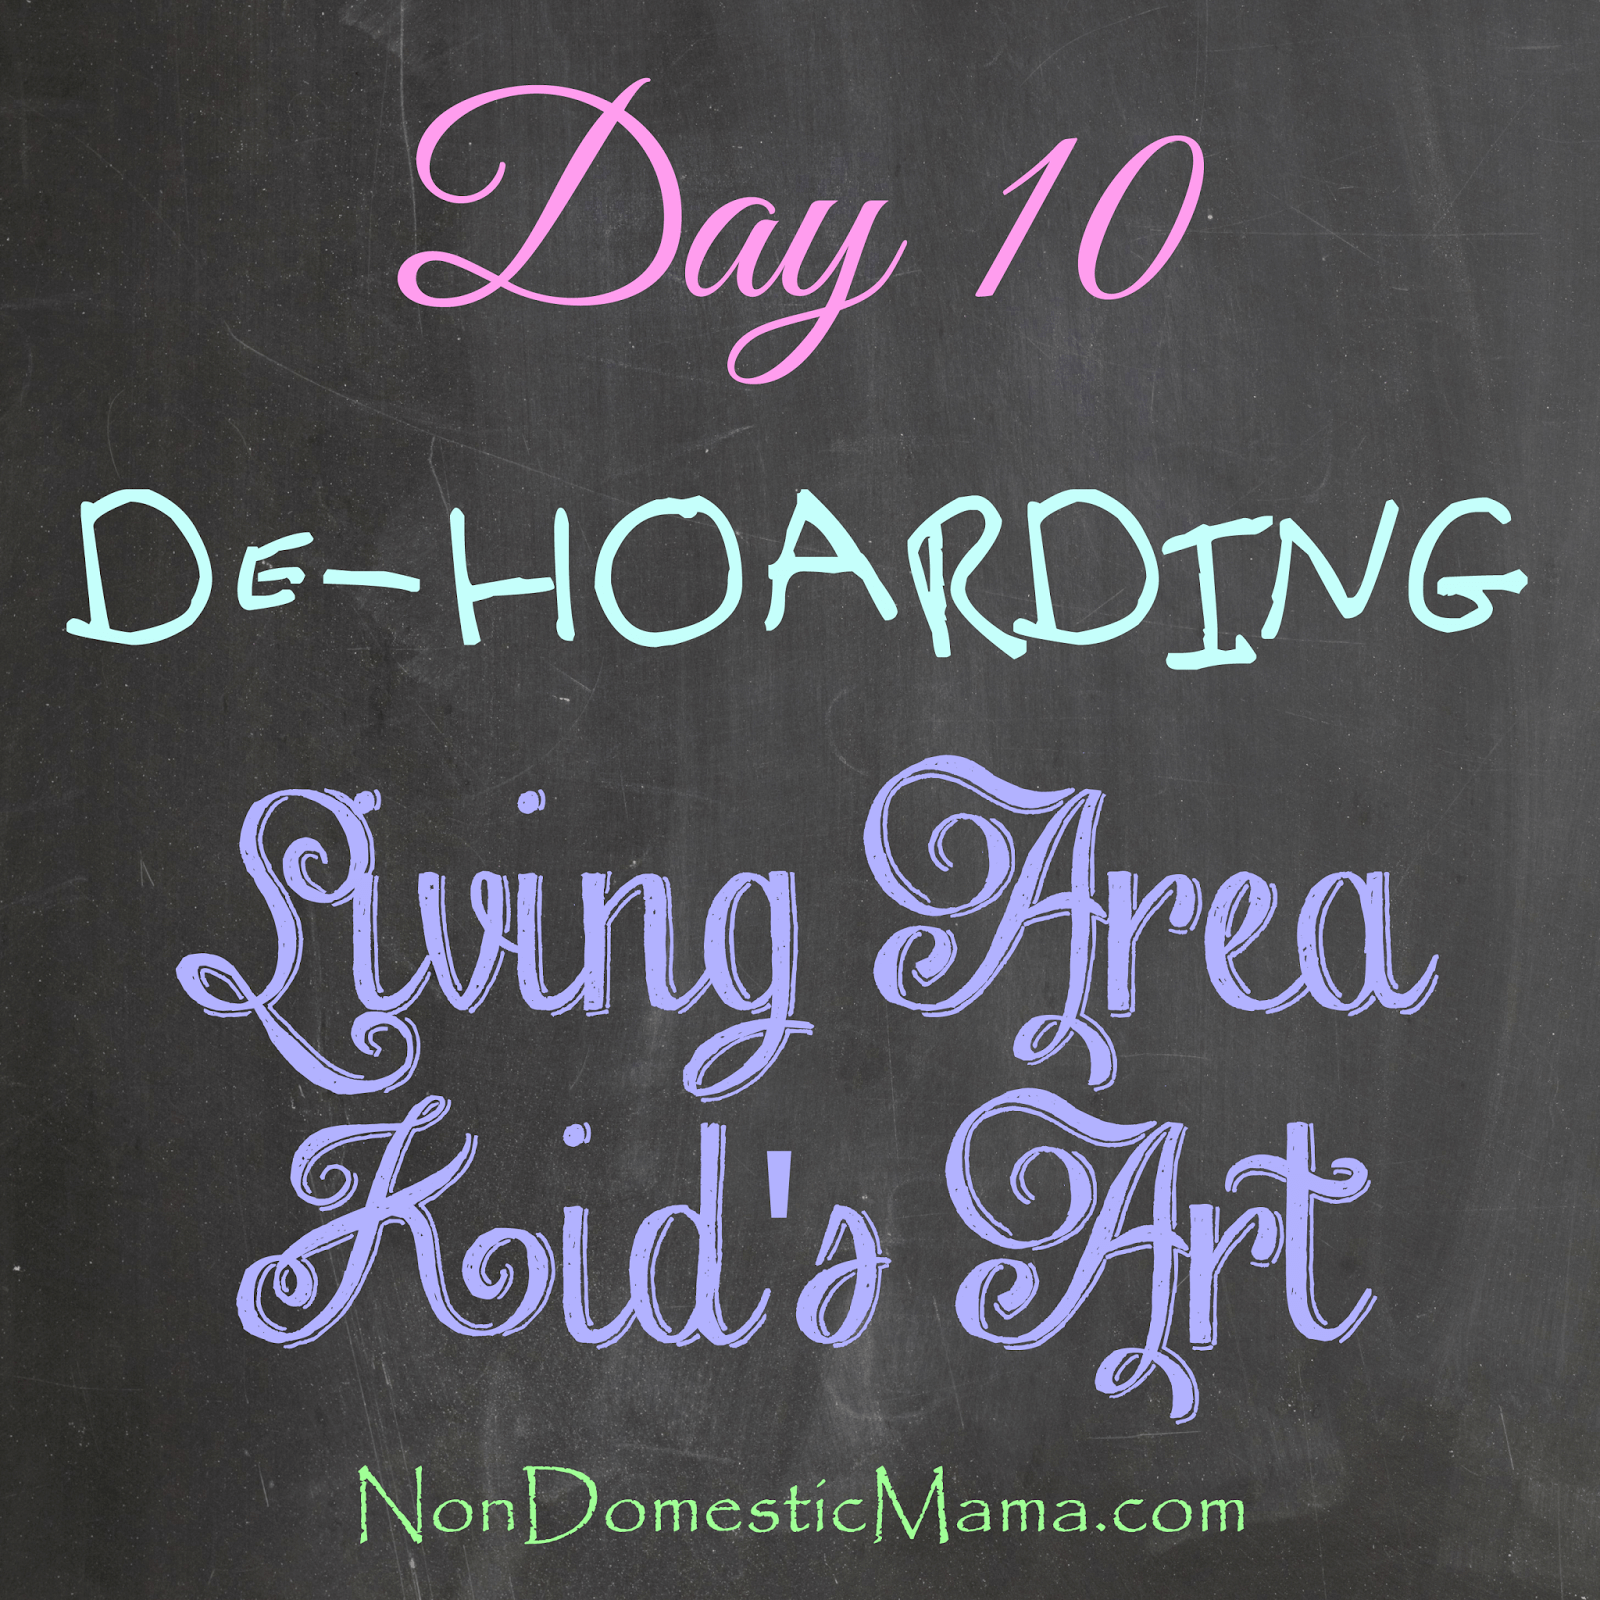 {Day 10} Kid's Artwork - 31 Days of De-Hoarding #write31days #dehoarding